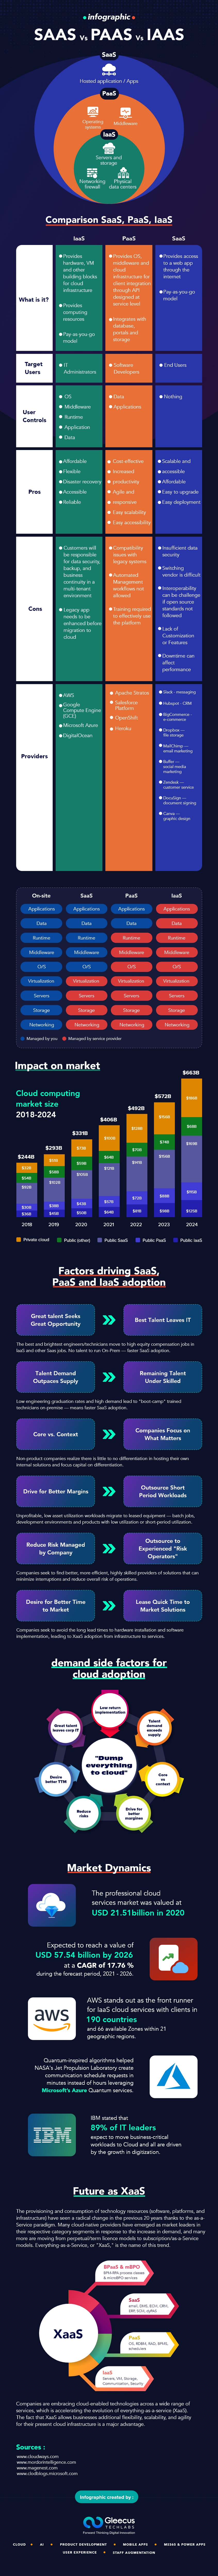 SAAS vs PAAS vs IAAS - Infographic